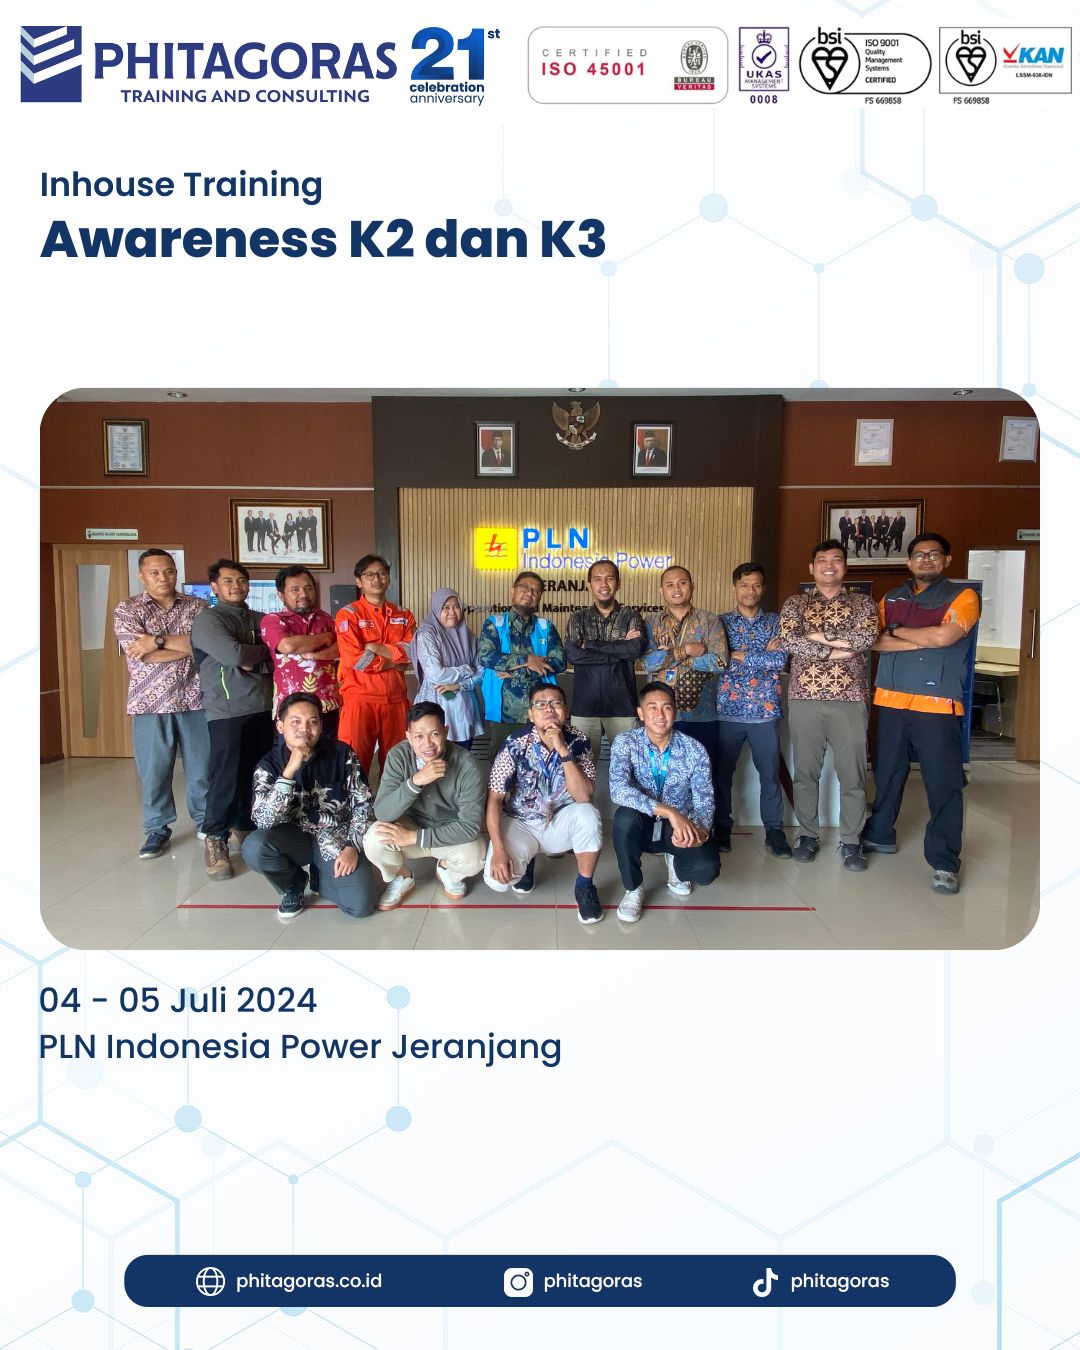 Inhouse Training Awareness K2 dan K3 - PLN Indonesia Power Jeranjang Tanggal 04 - 05 Juli 2024